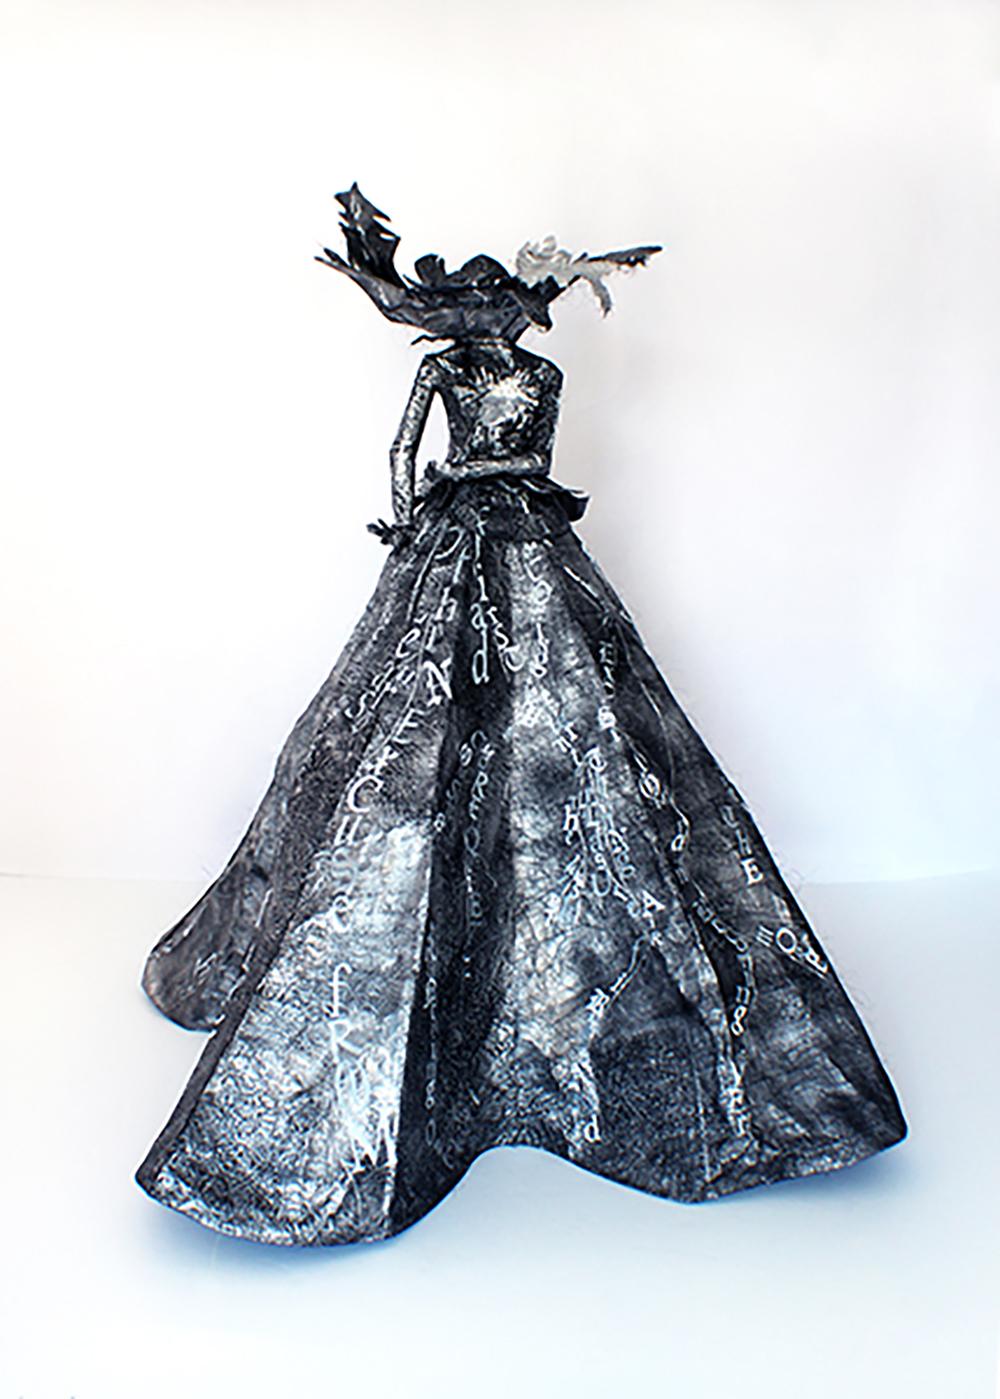 Lesley Dill Figurative Sculpture – BIG HEART GOWN Kleid 